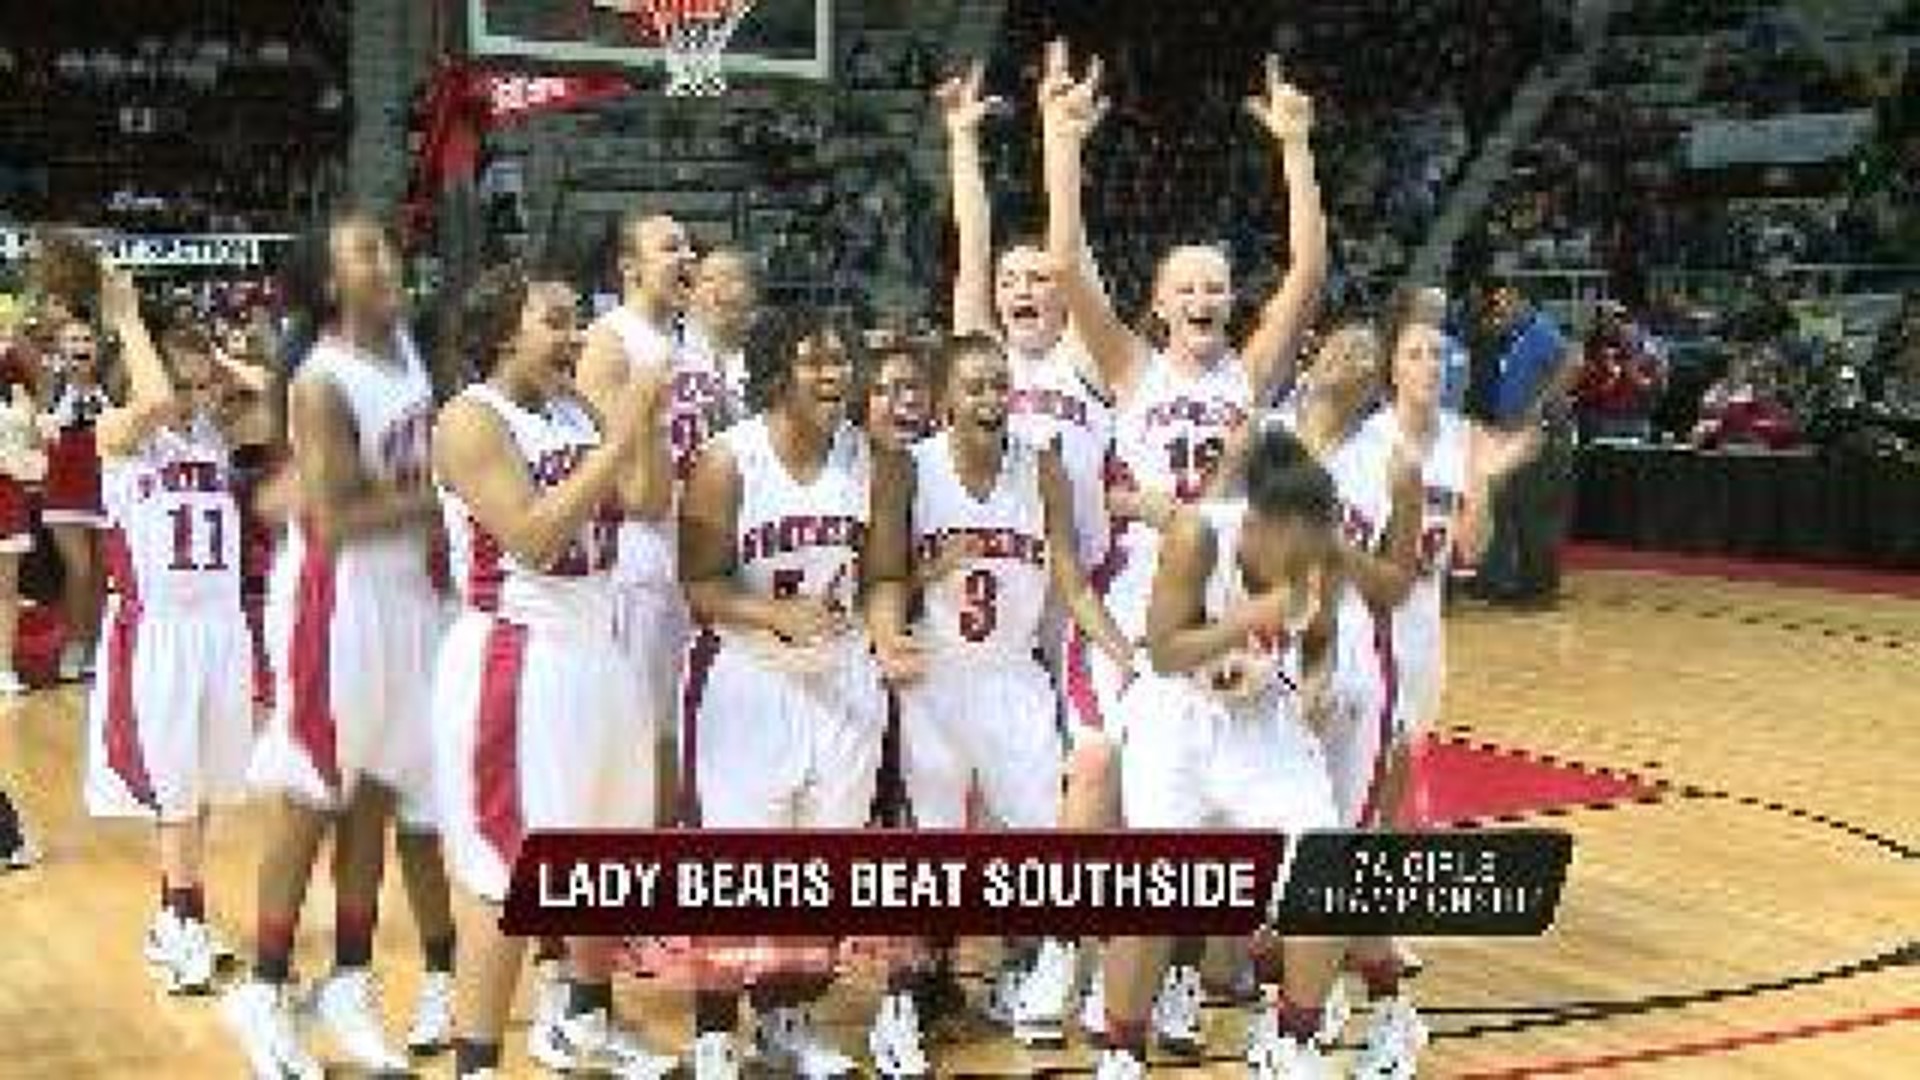 Lady Bears Win State